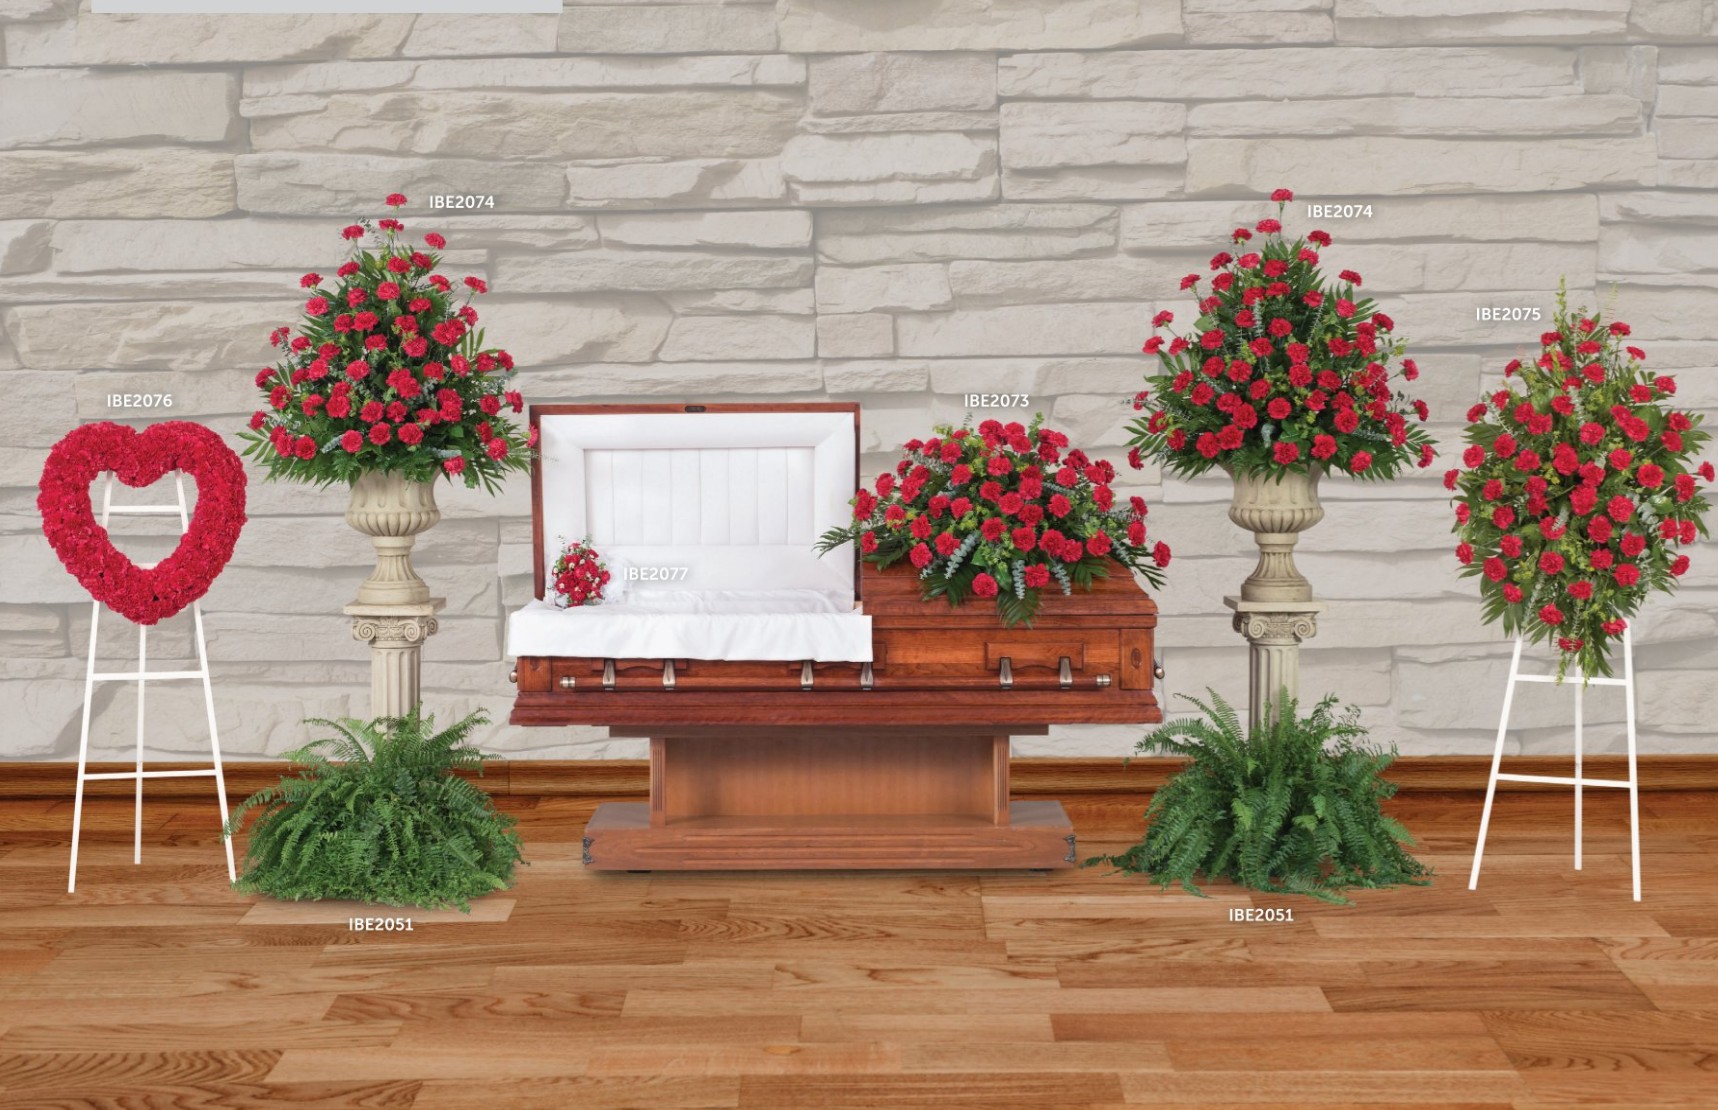 Funeral Flowers, Sympathy Flowers